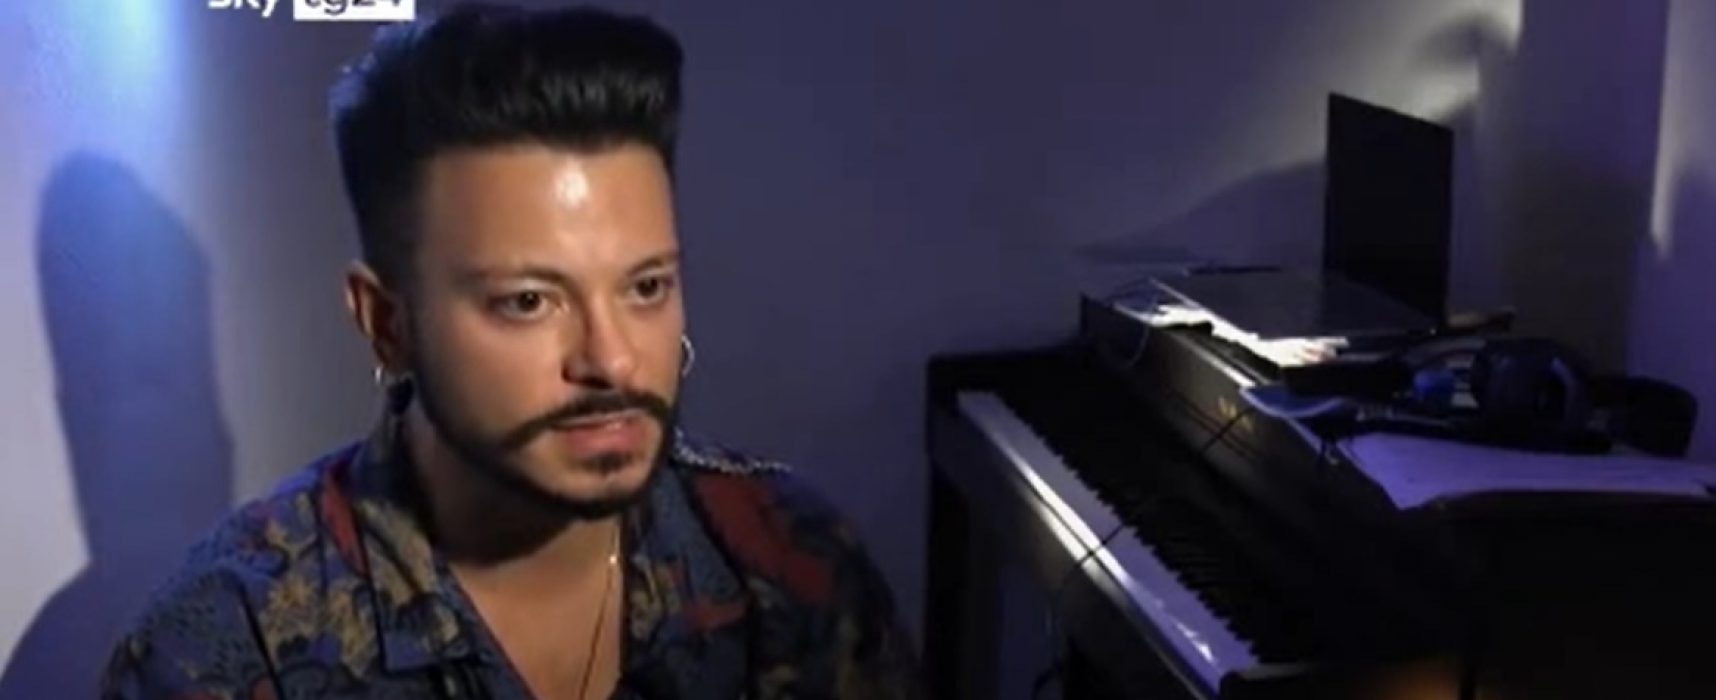 Il cantante biscegliese Andiel racconta il suo “coming out” a Sky TG24 / VIDEO